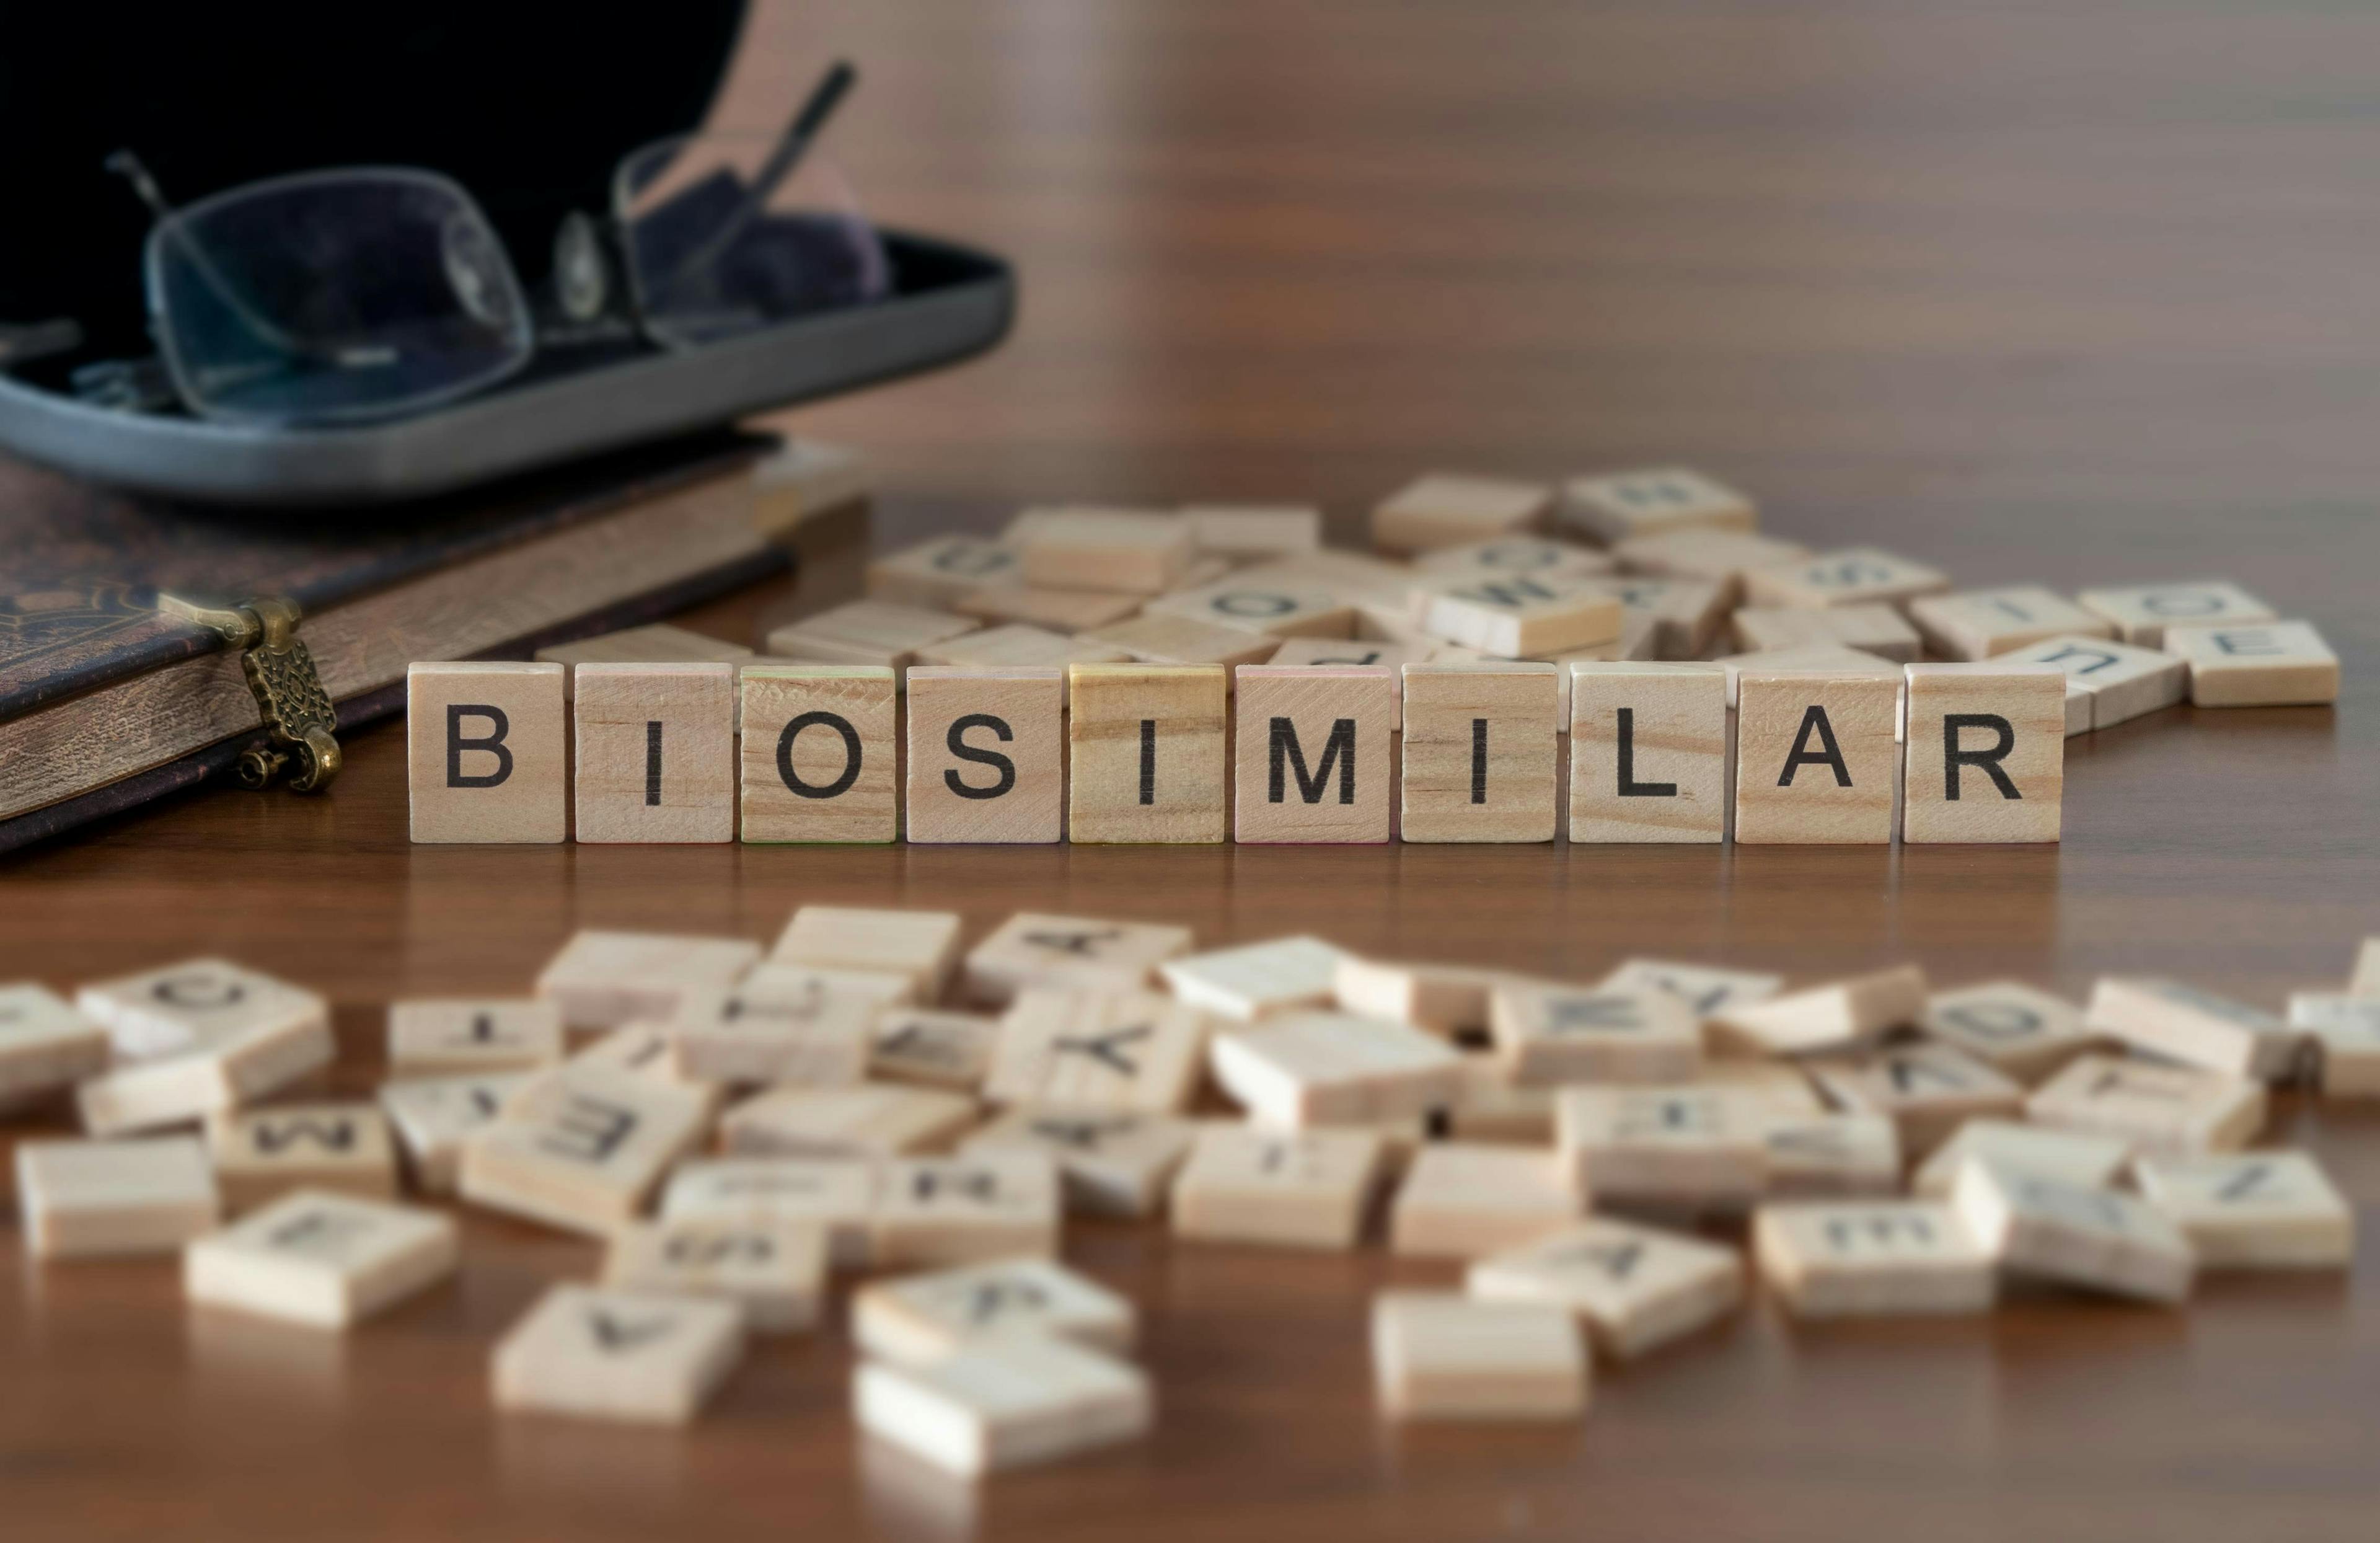 'Biosimilar' written in wood letter tiles / lexiconimages - stock.adobe.com